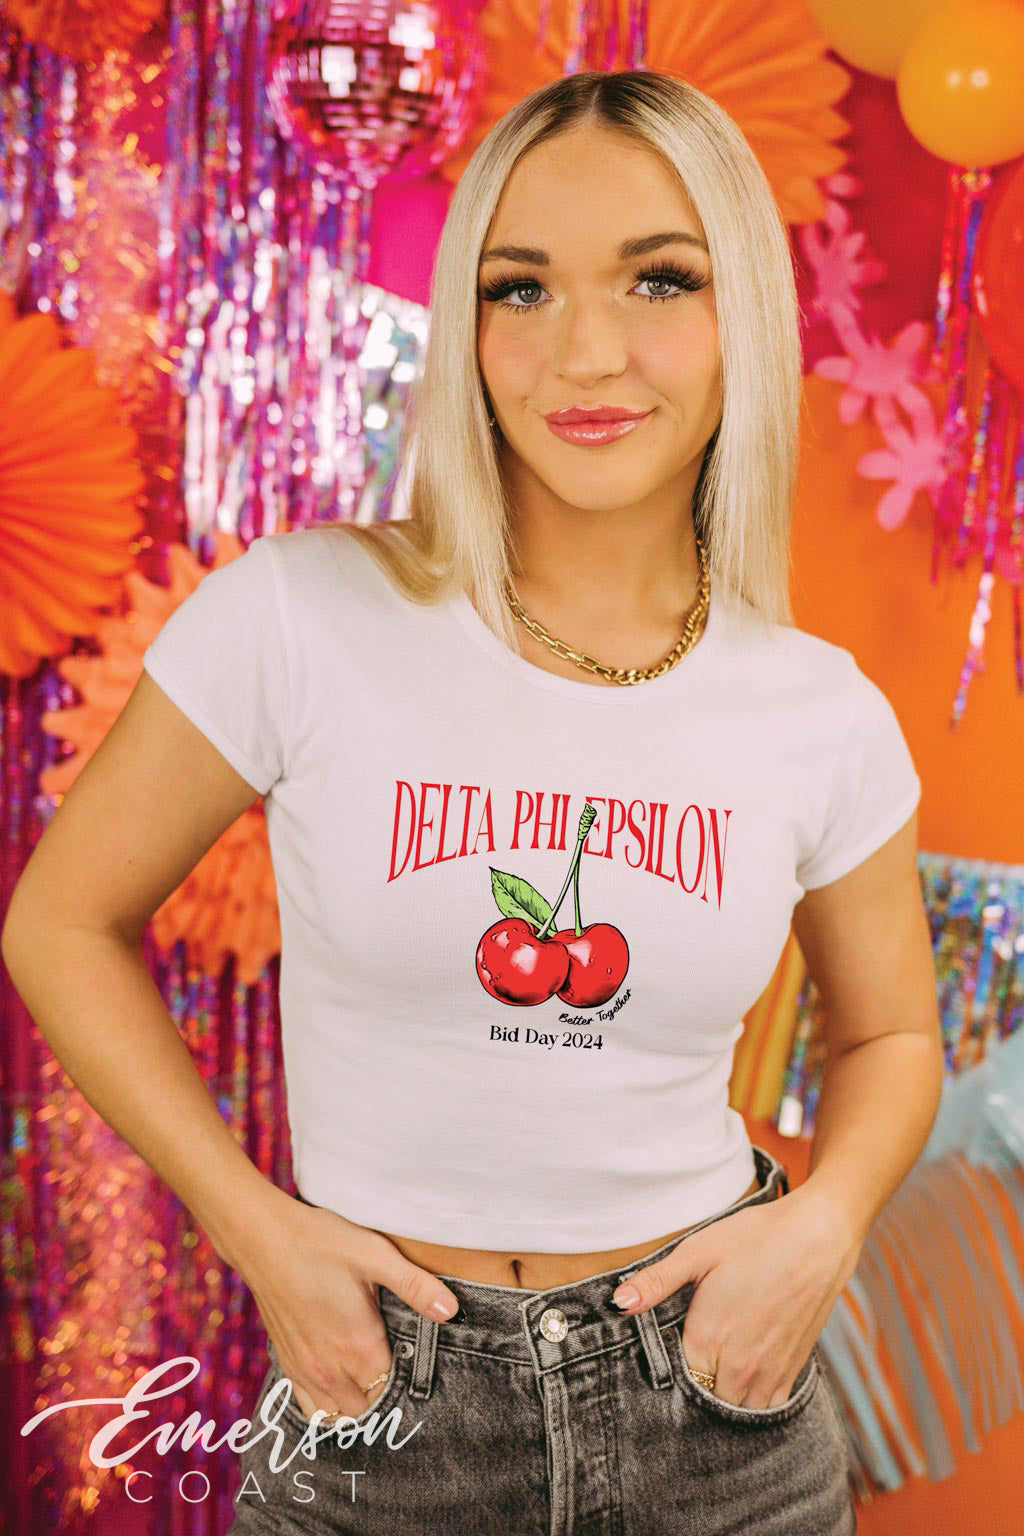 Delta Phi Epsilon Cherry Bomb Bid Day Baby Tee